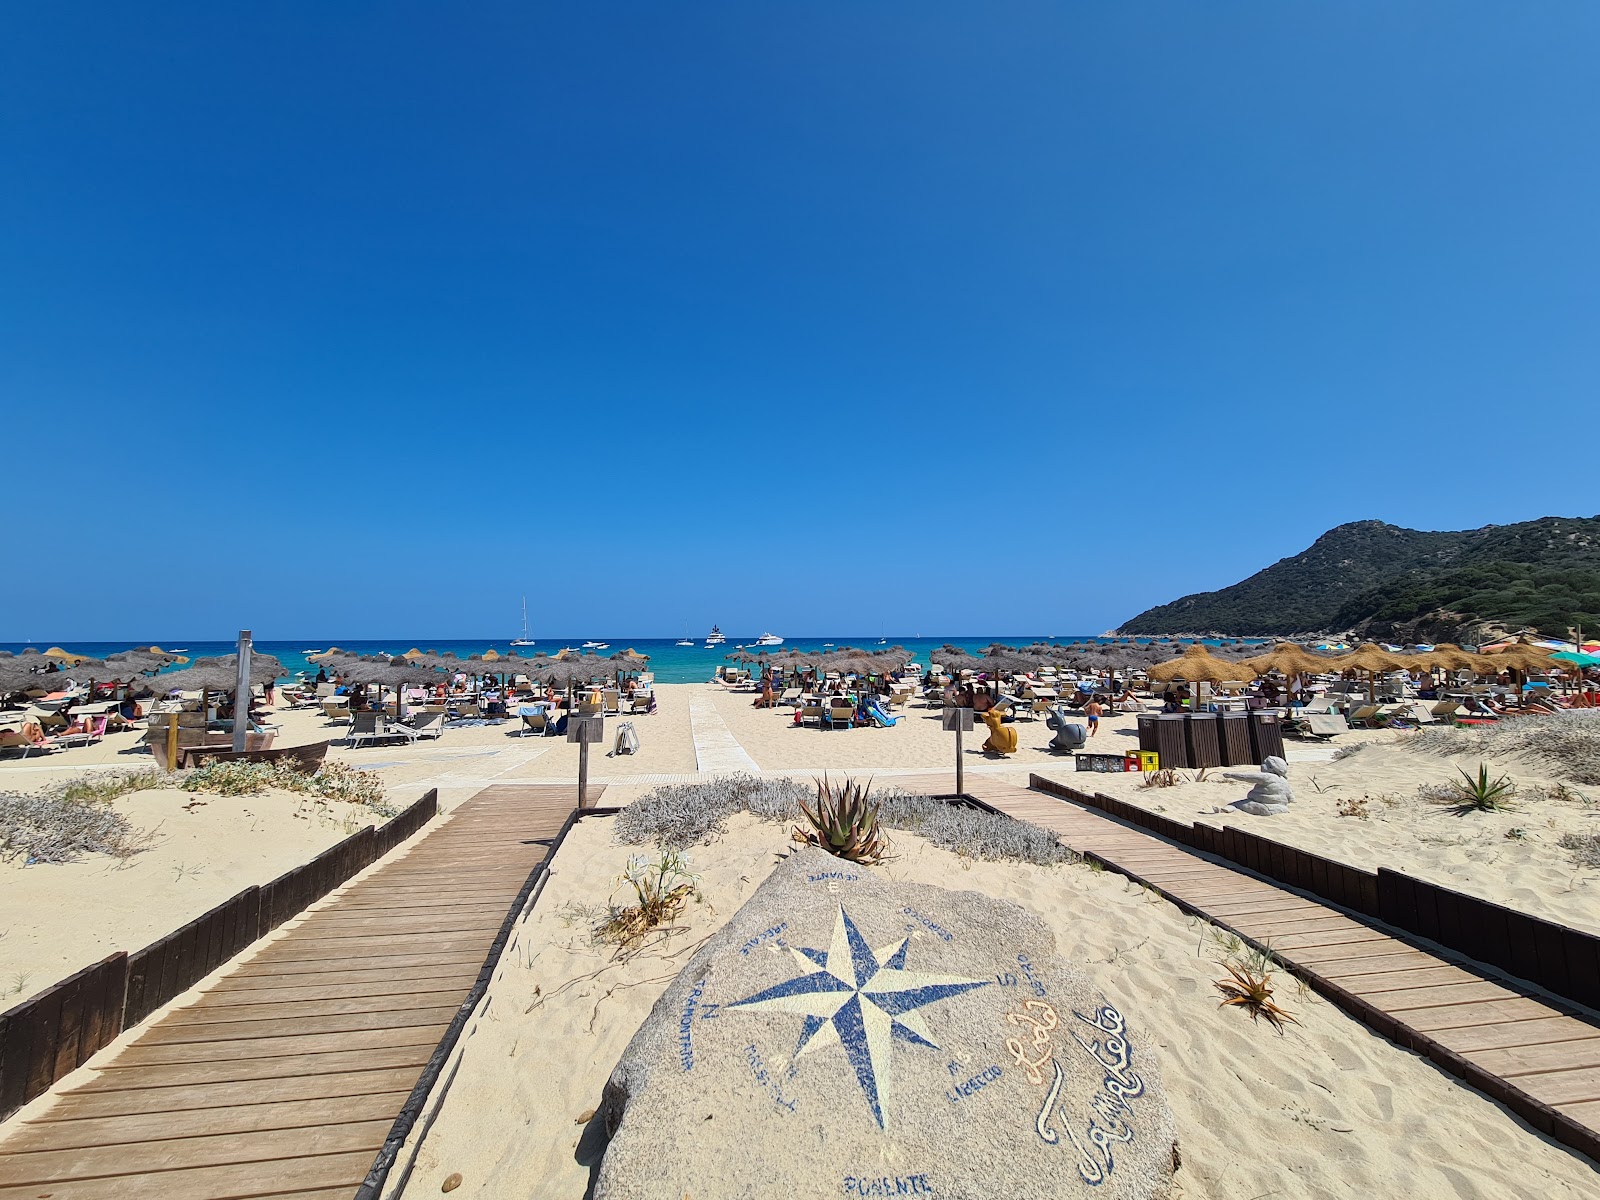 Foto af Spiaggia di Cala Sinzias med turkis rent vand overflade